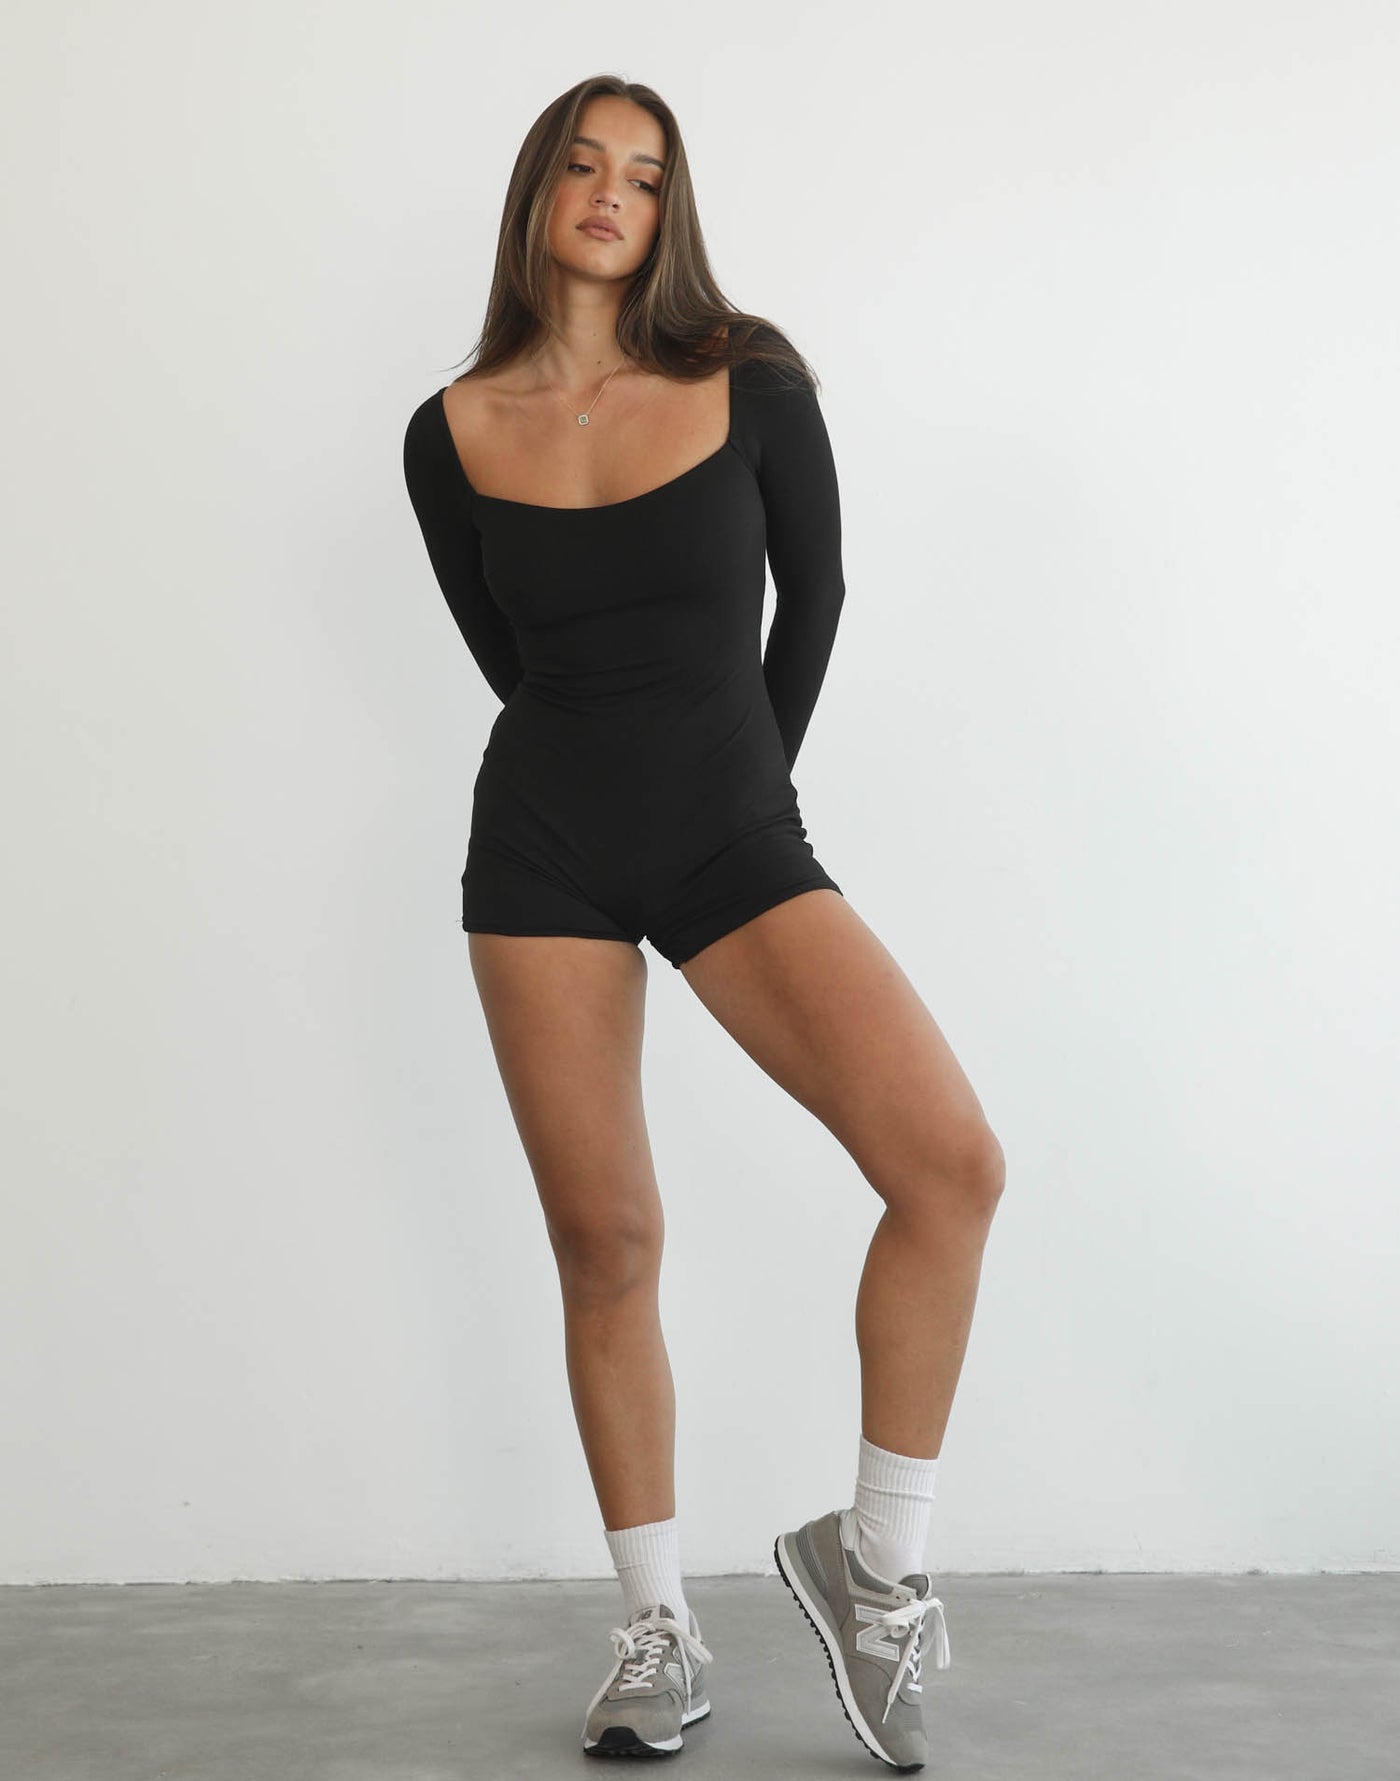 Diaz Playsuit (Black) - Long Sleeve Playsuit - Women's Playsuit - Charcoal Clothing